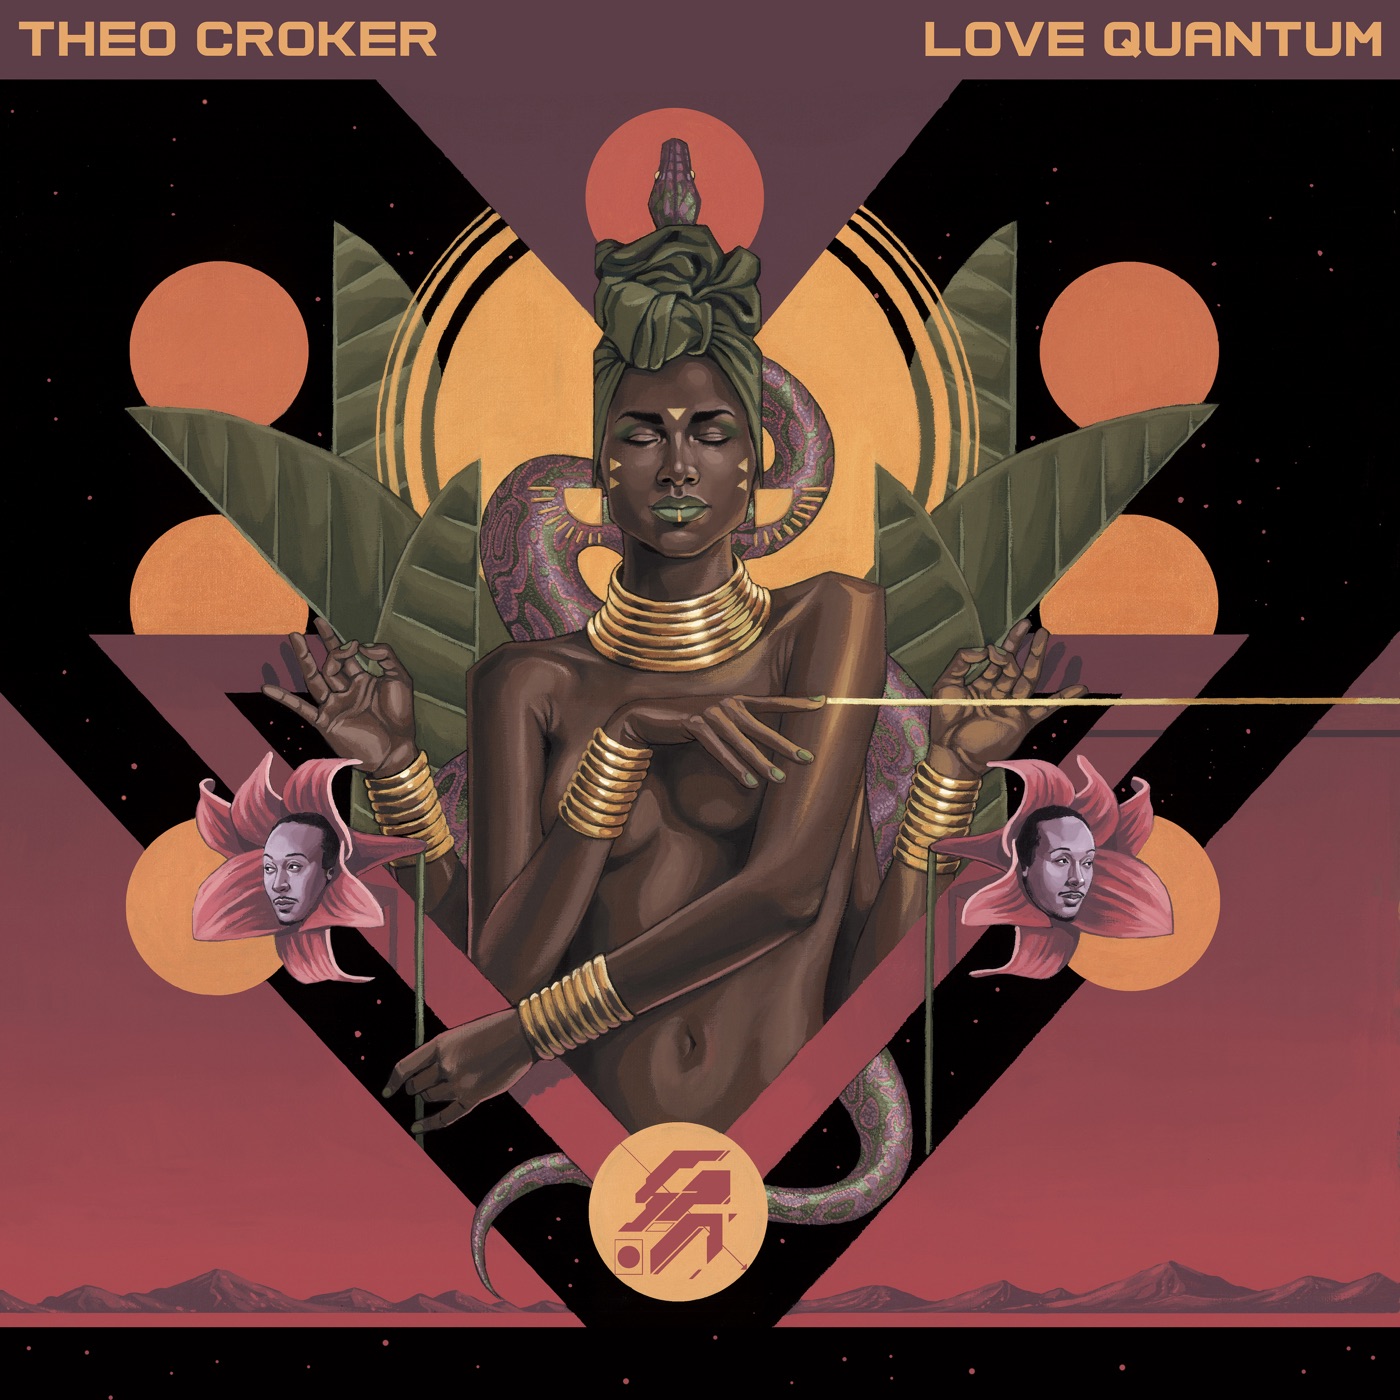 LOVE QUANTUM by Theo Croker